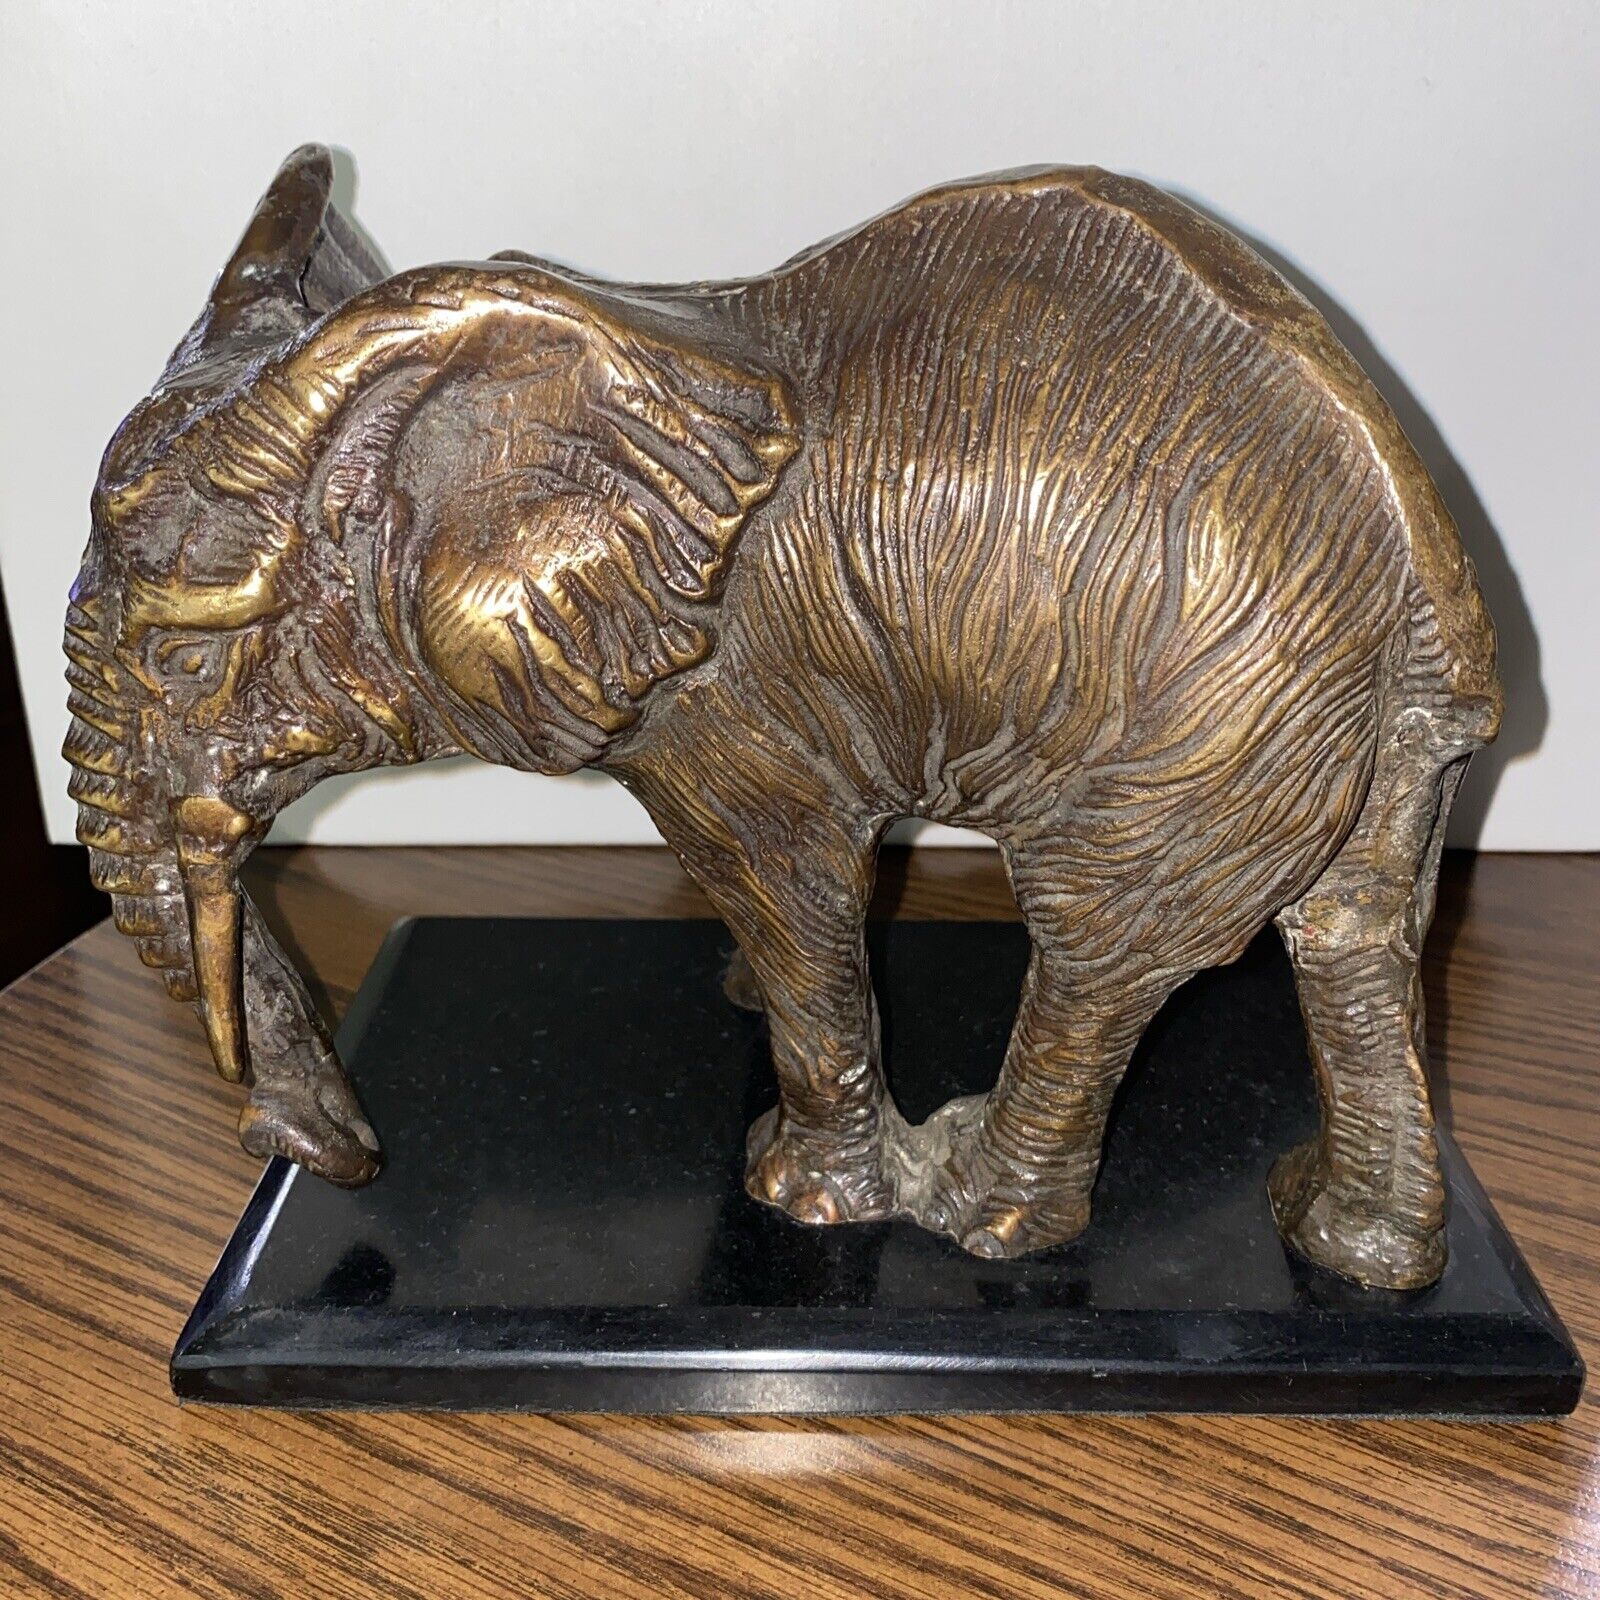 Hot cast Bronze Elephant 7.5” from bottom of base.